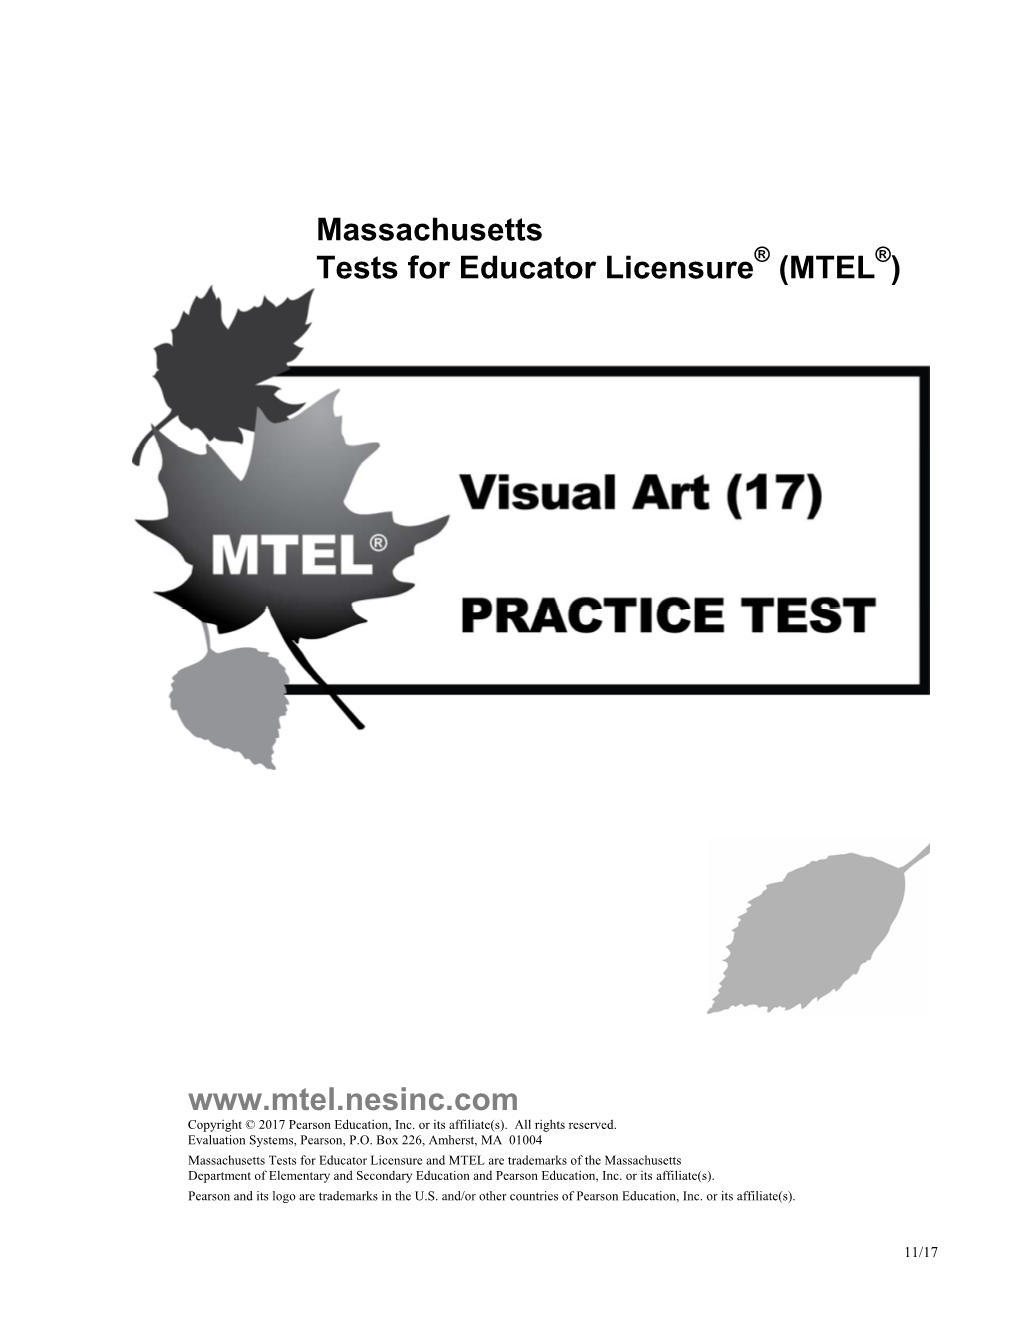 Visual Art (17) Practice Test